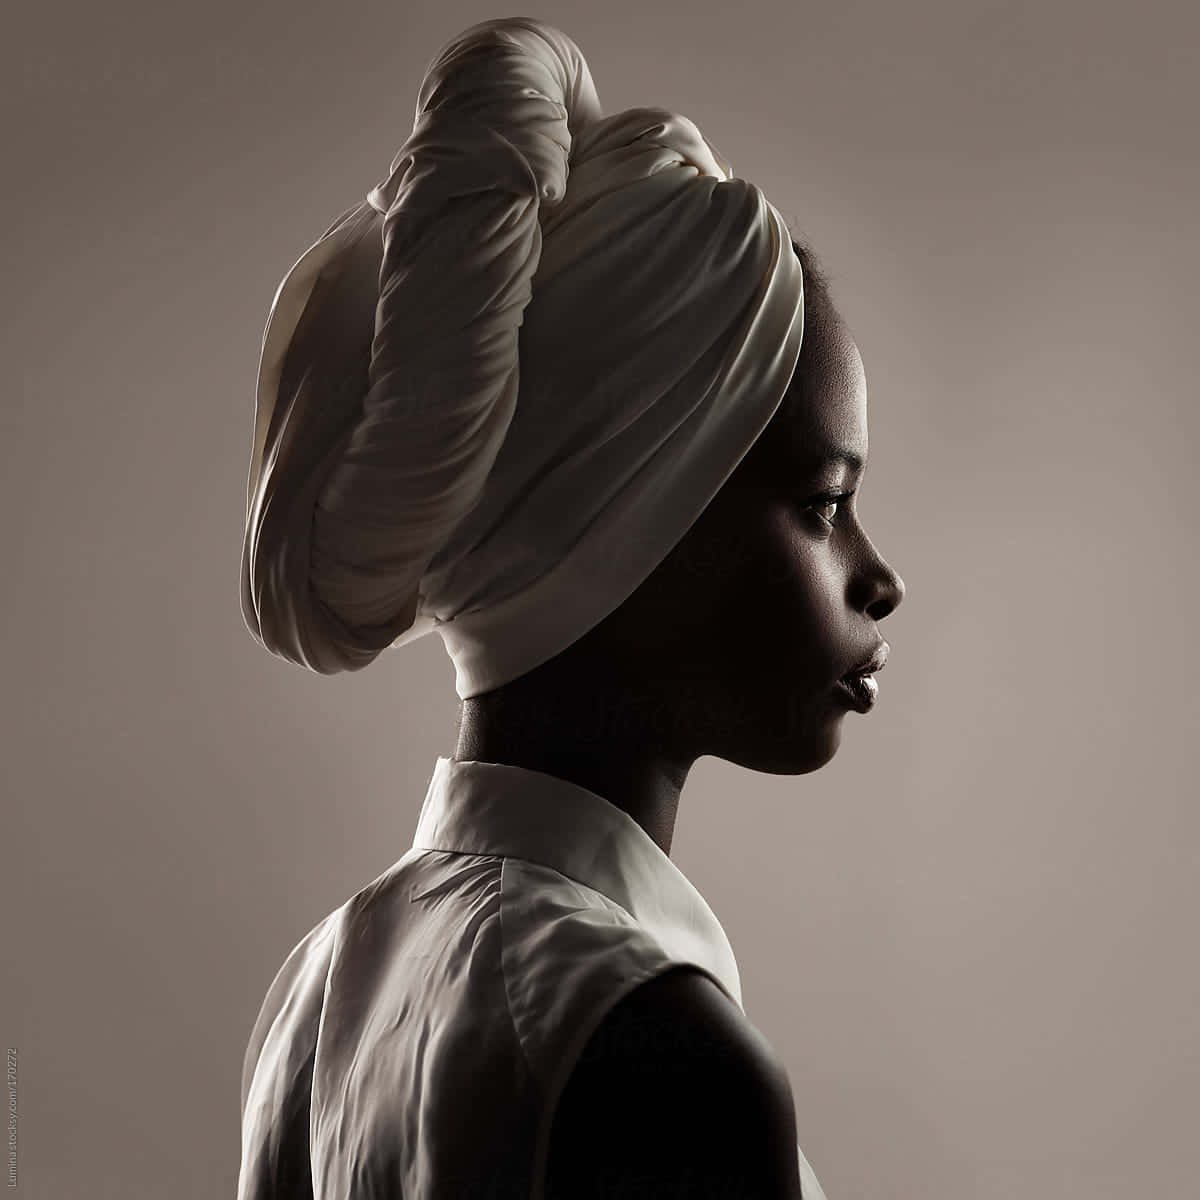 A Woman In A White Turban